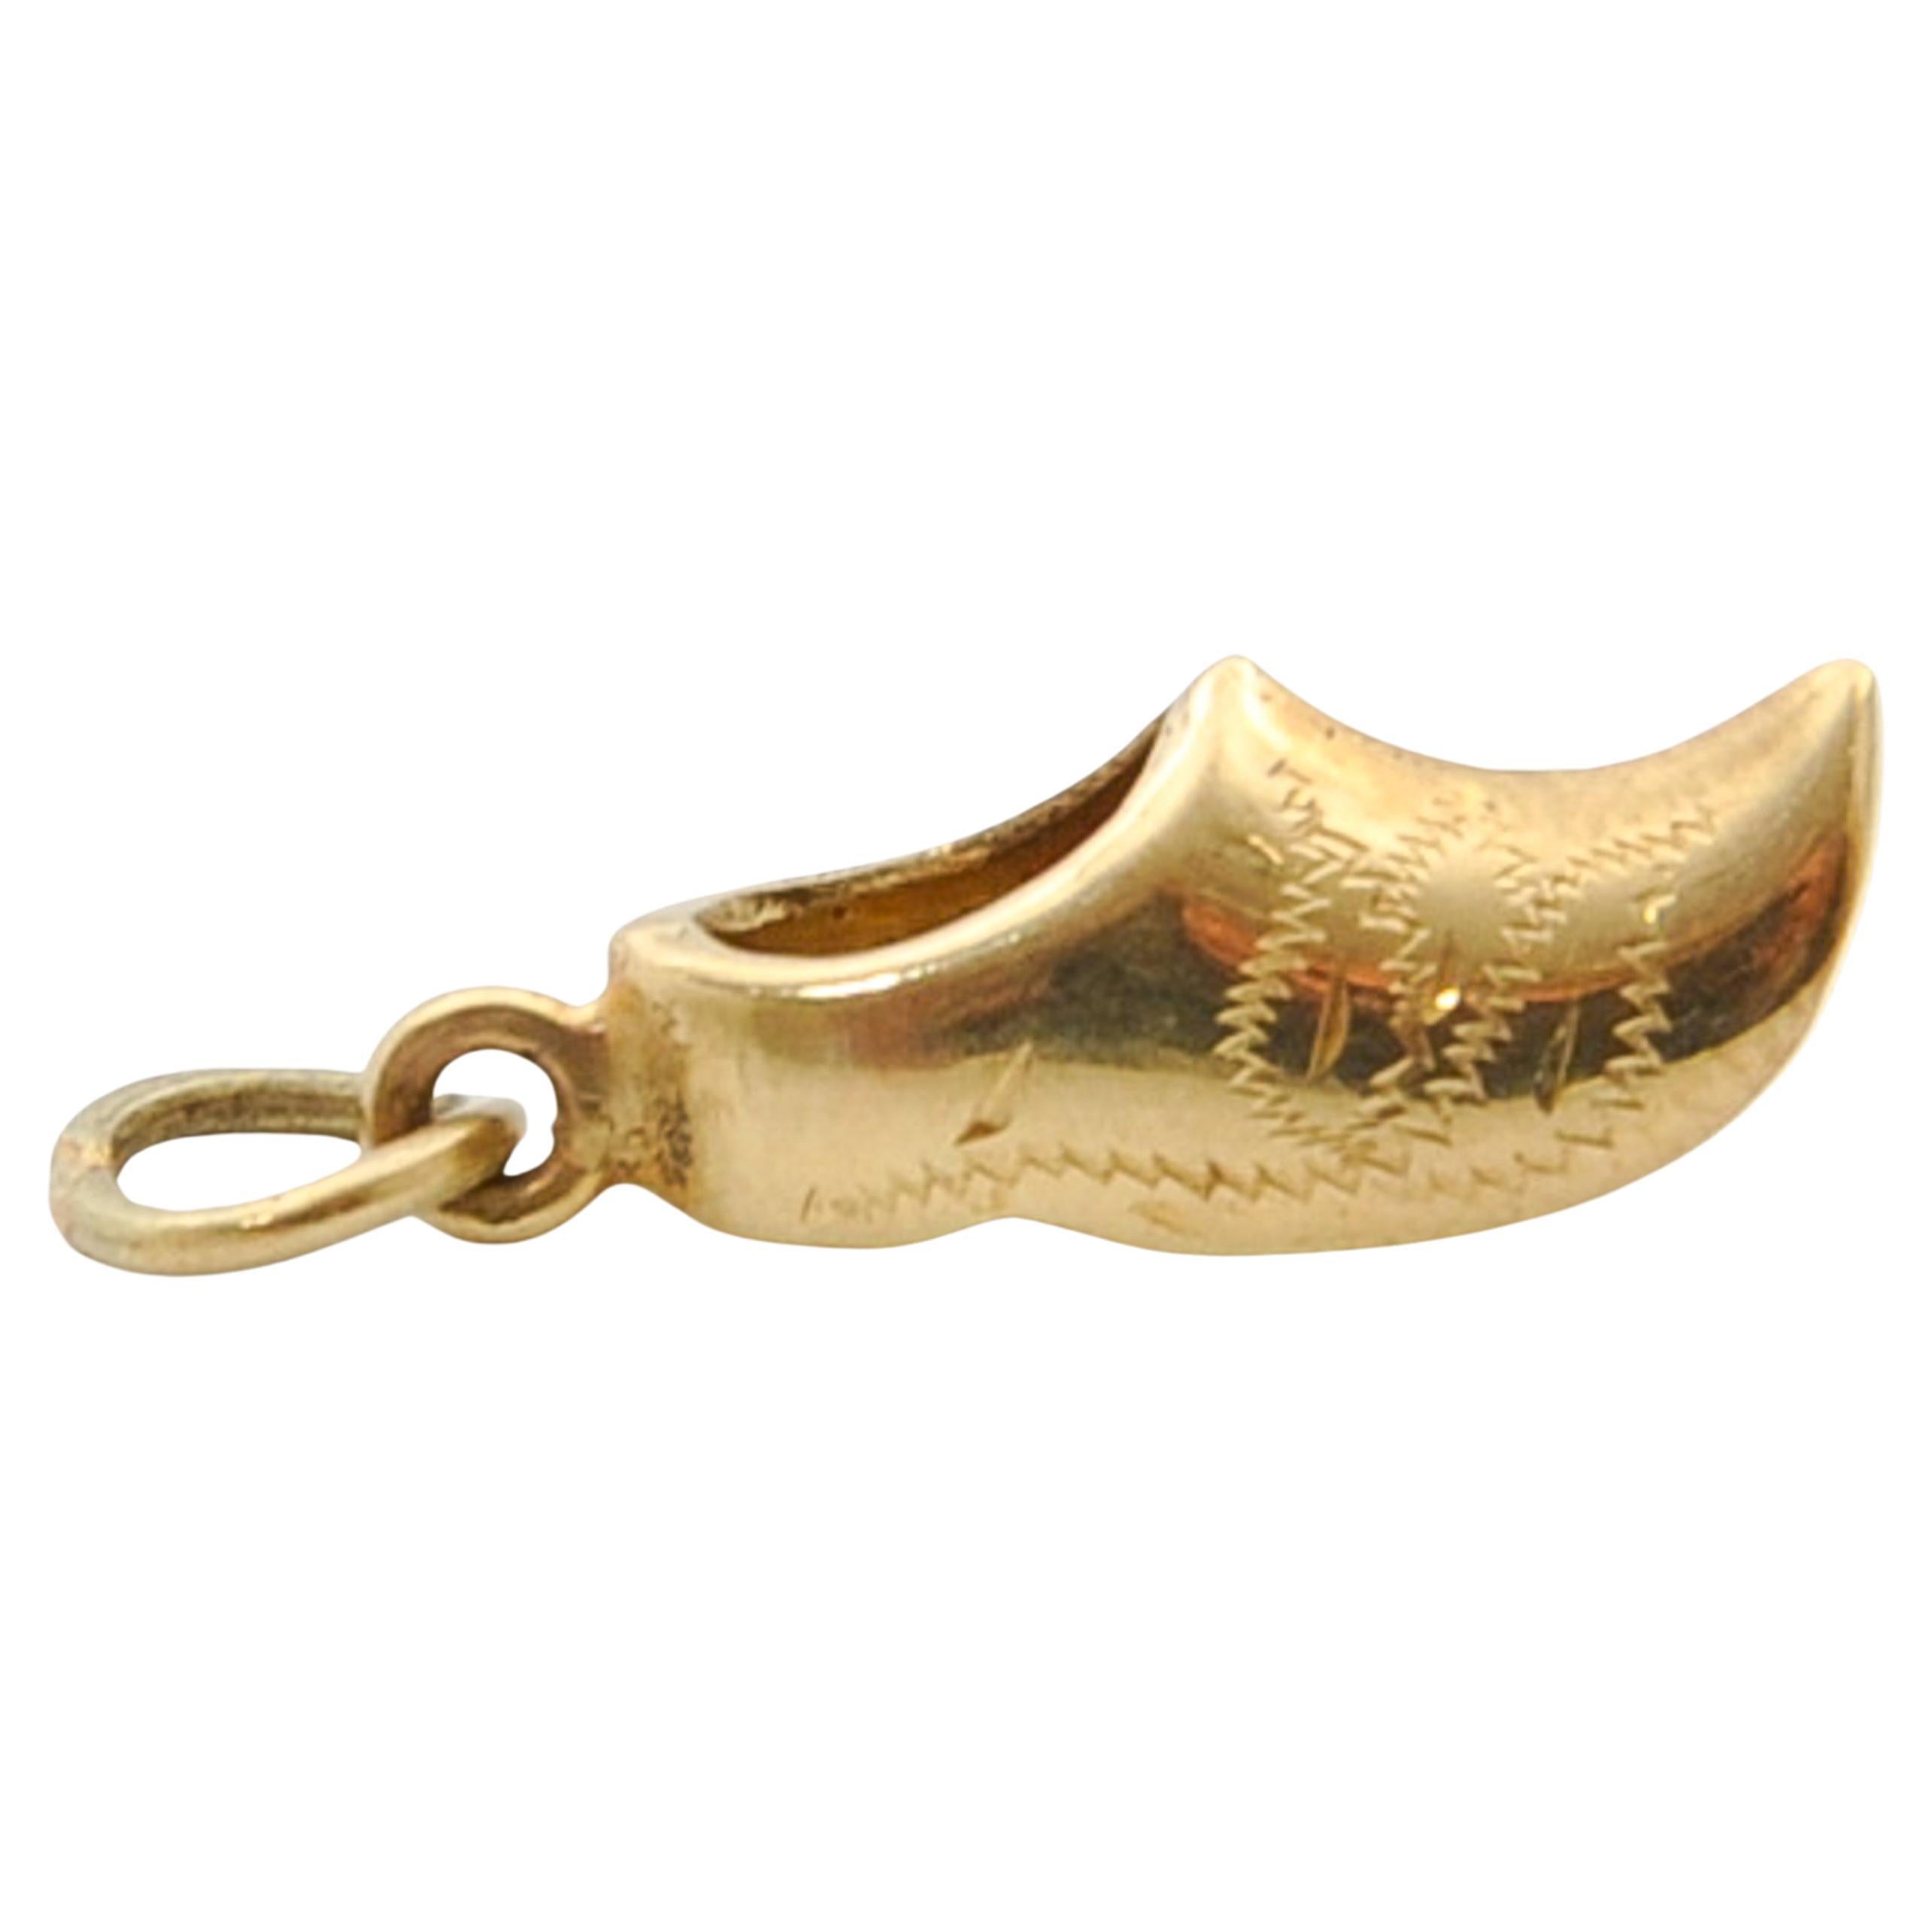 Vintage Engraved Dutch Clog 14 Karat Gold Charm Pendant